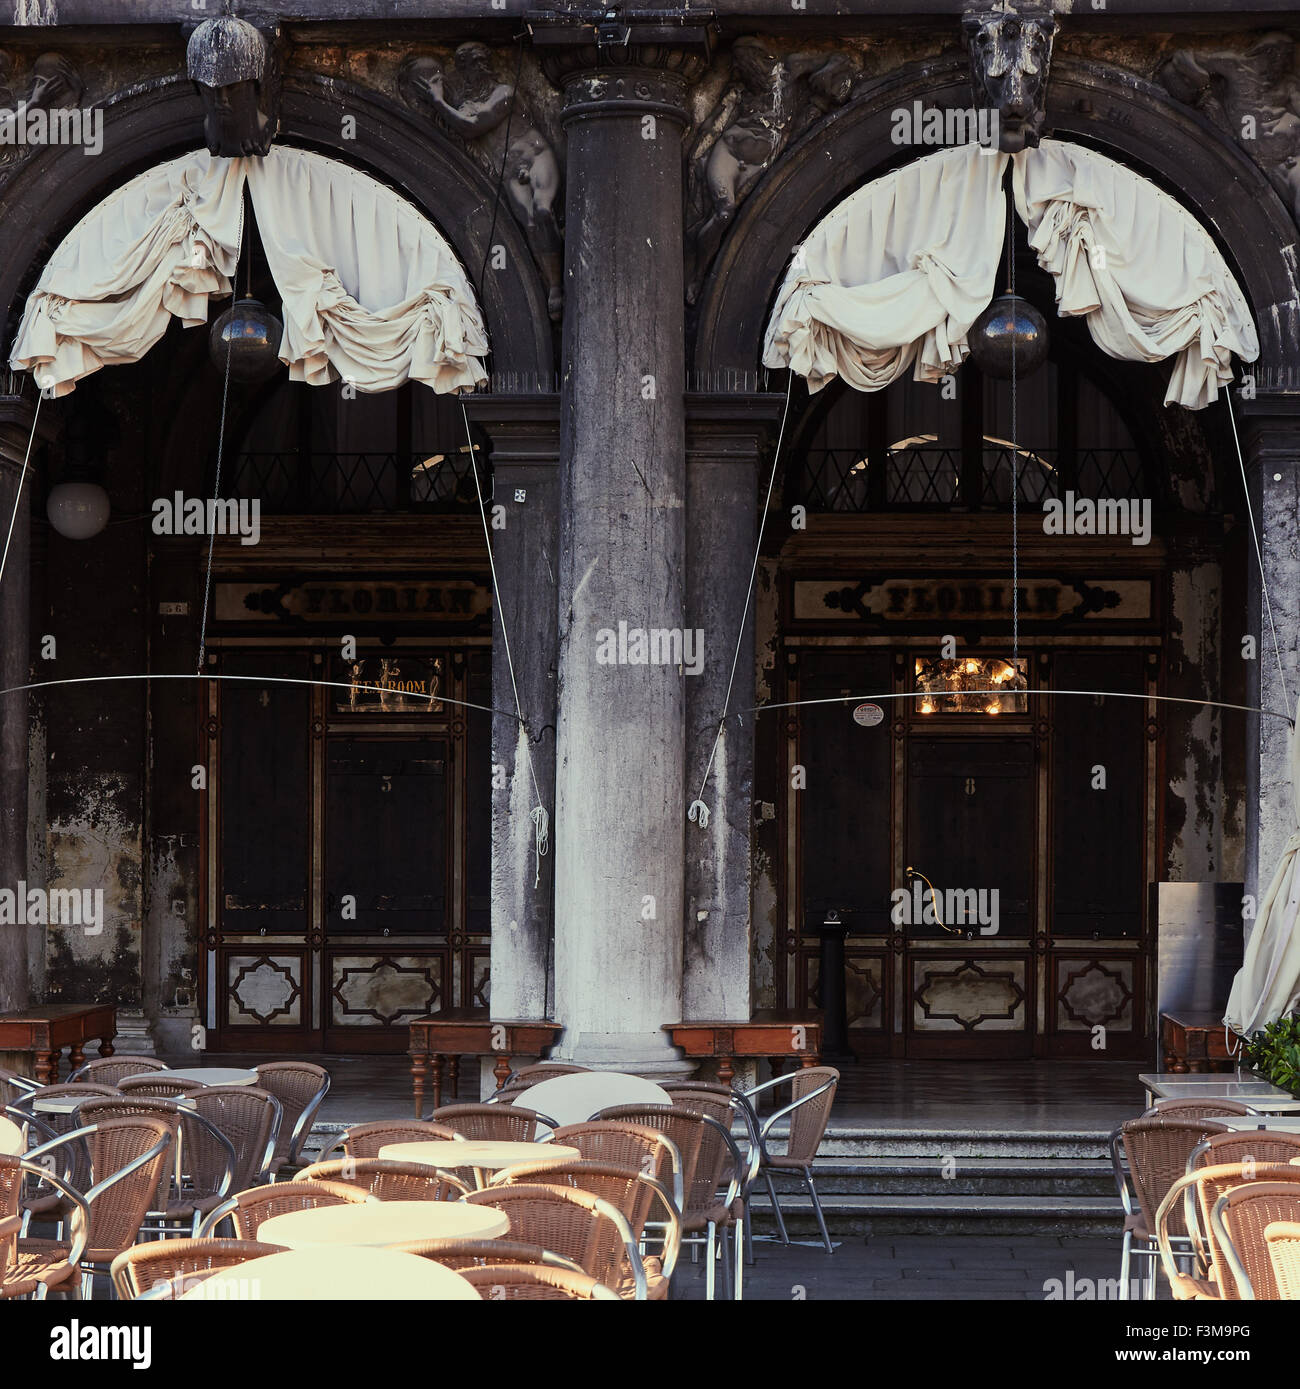 Caffe Florian das älteste Kaffeehaus im Dauerbetrieb Piazza San Marco Venedig Veneto Italien Europa Stockfoto